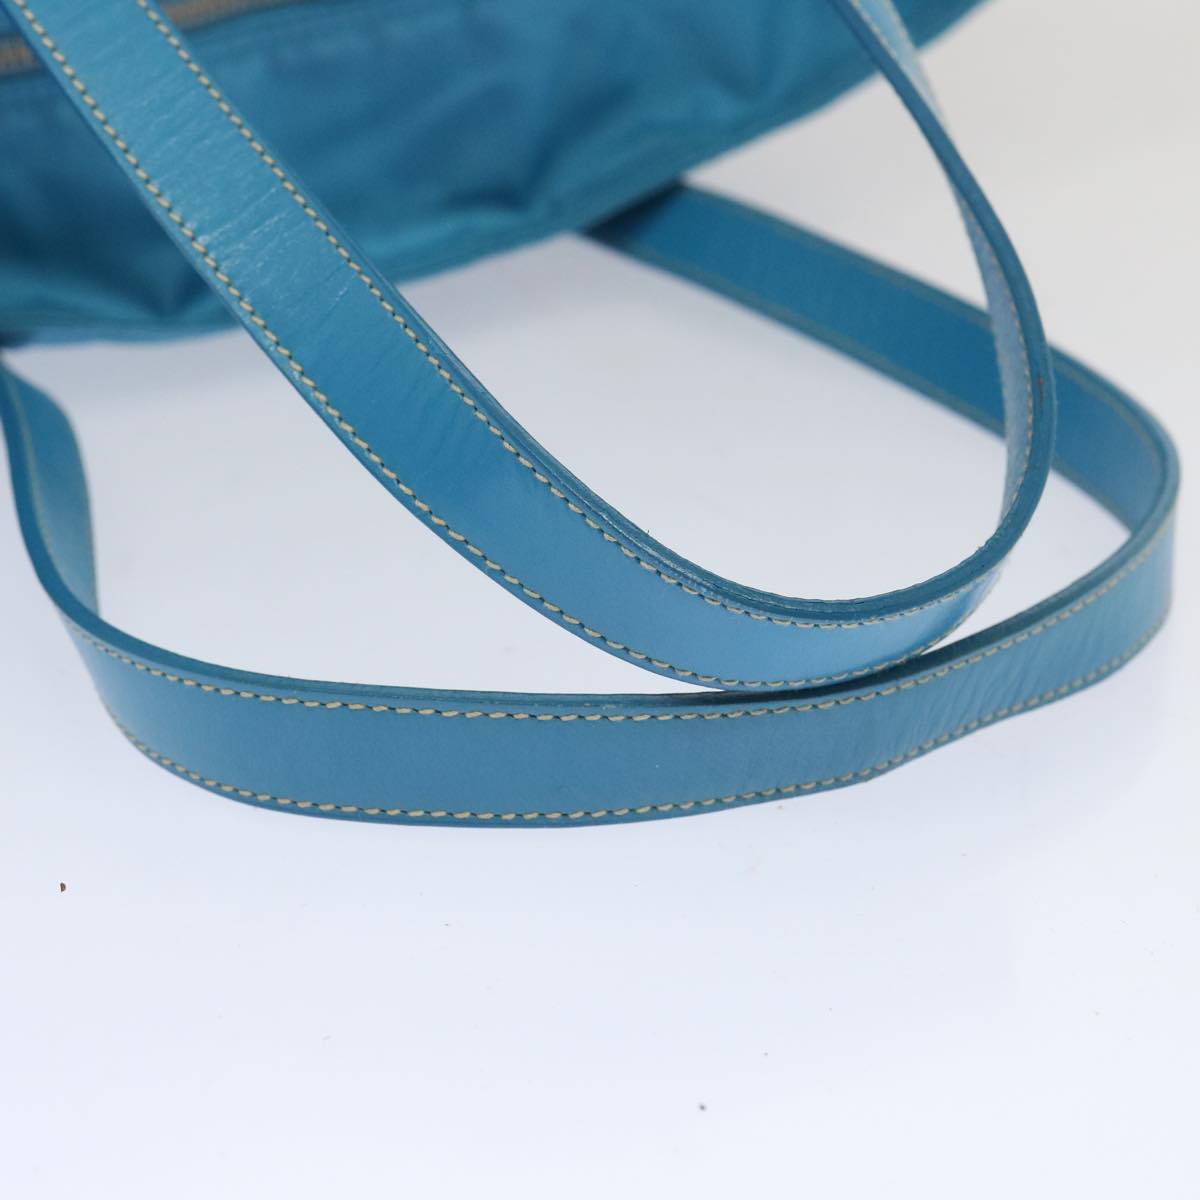 PRADA Tote Bag Nylon Light Blue Auth 67419